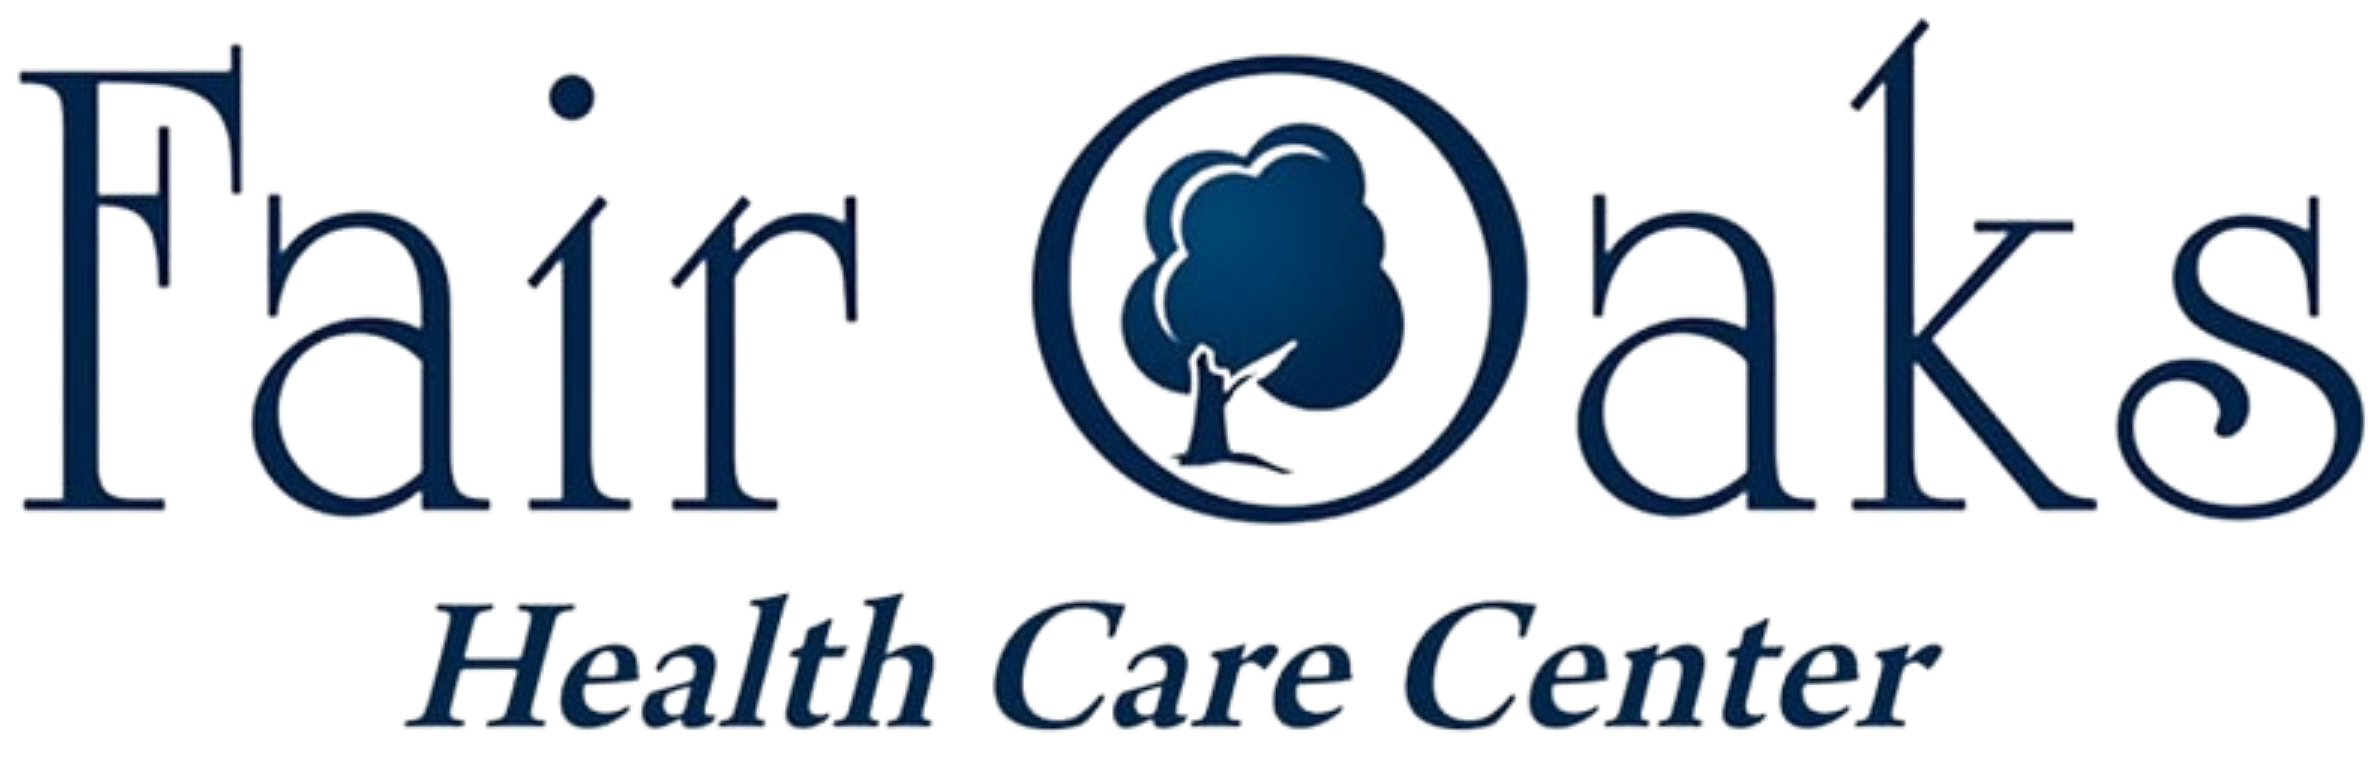 Fair Oaks Health Care Center Multi Chamber Mixer Events Crystal Lake